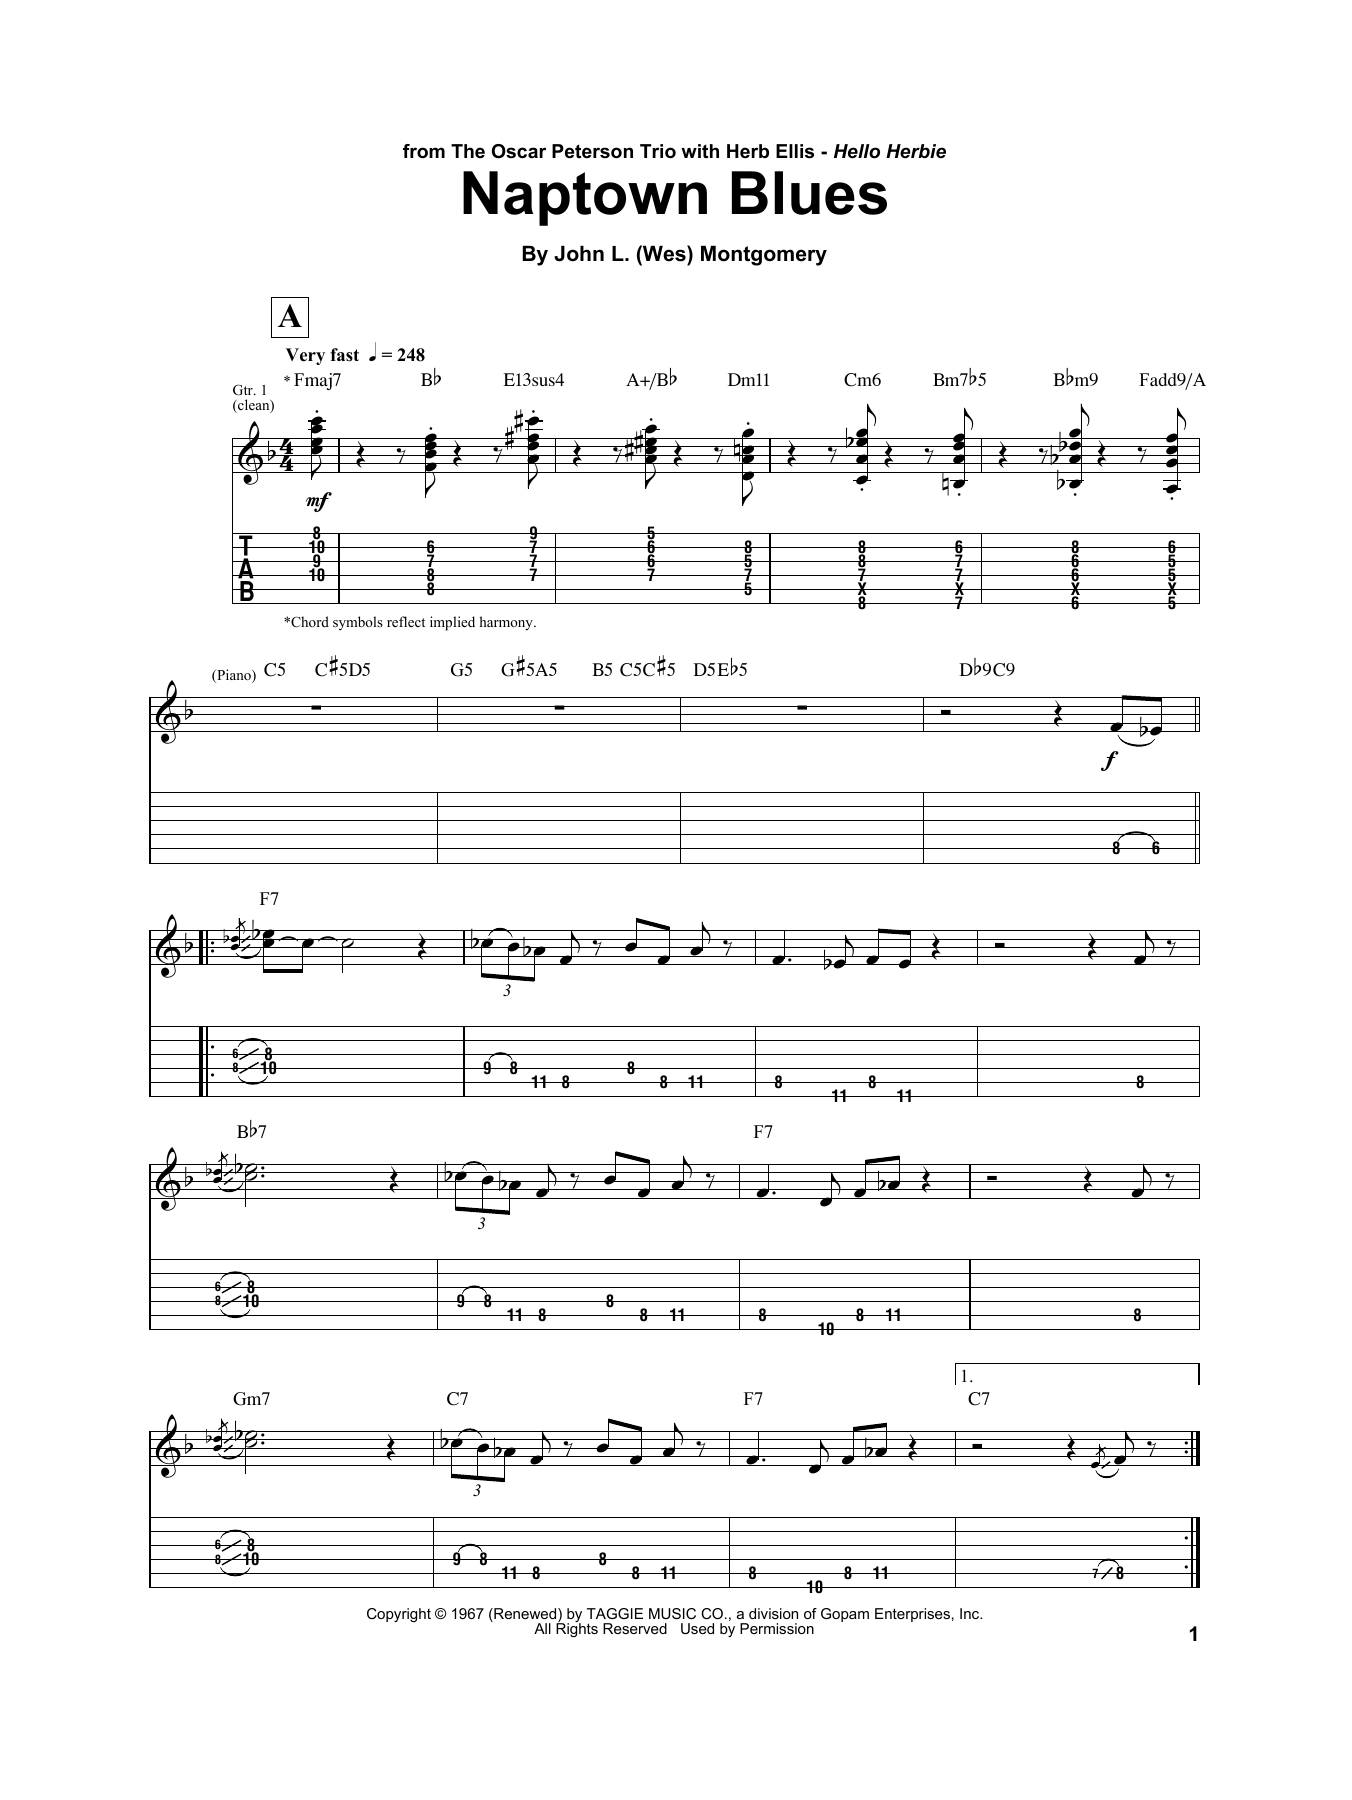 Herb Ellis Naptown Blues Sheet Music Notes & Chords for Electric Guitar Transcription - Download or Print PDF